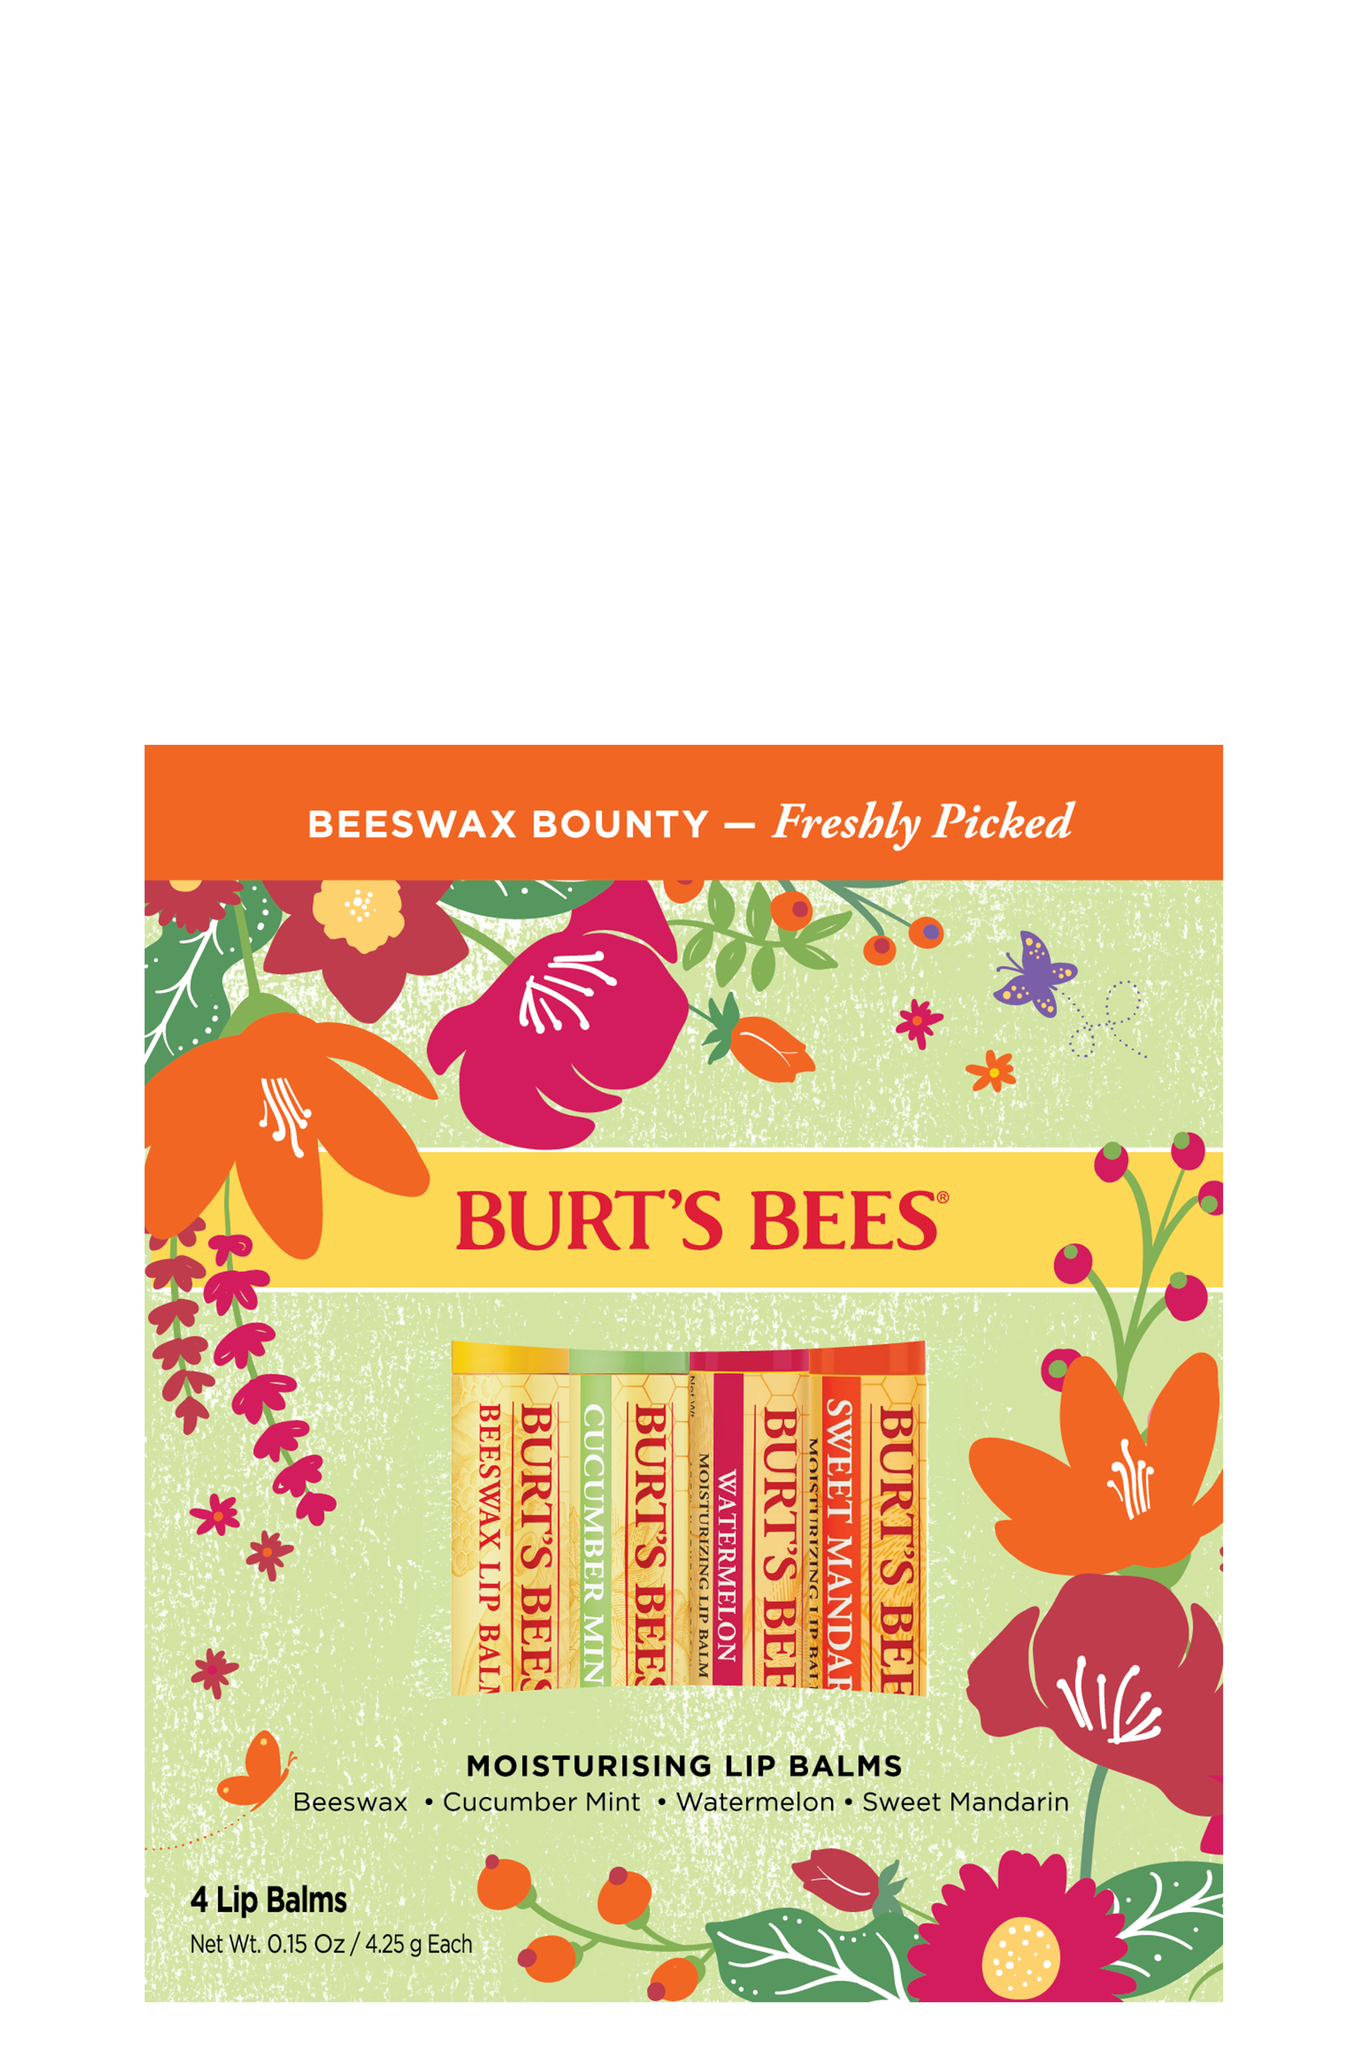 BURTS BEES BEESWAX LIP BALM 4.25G